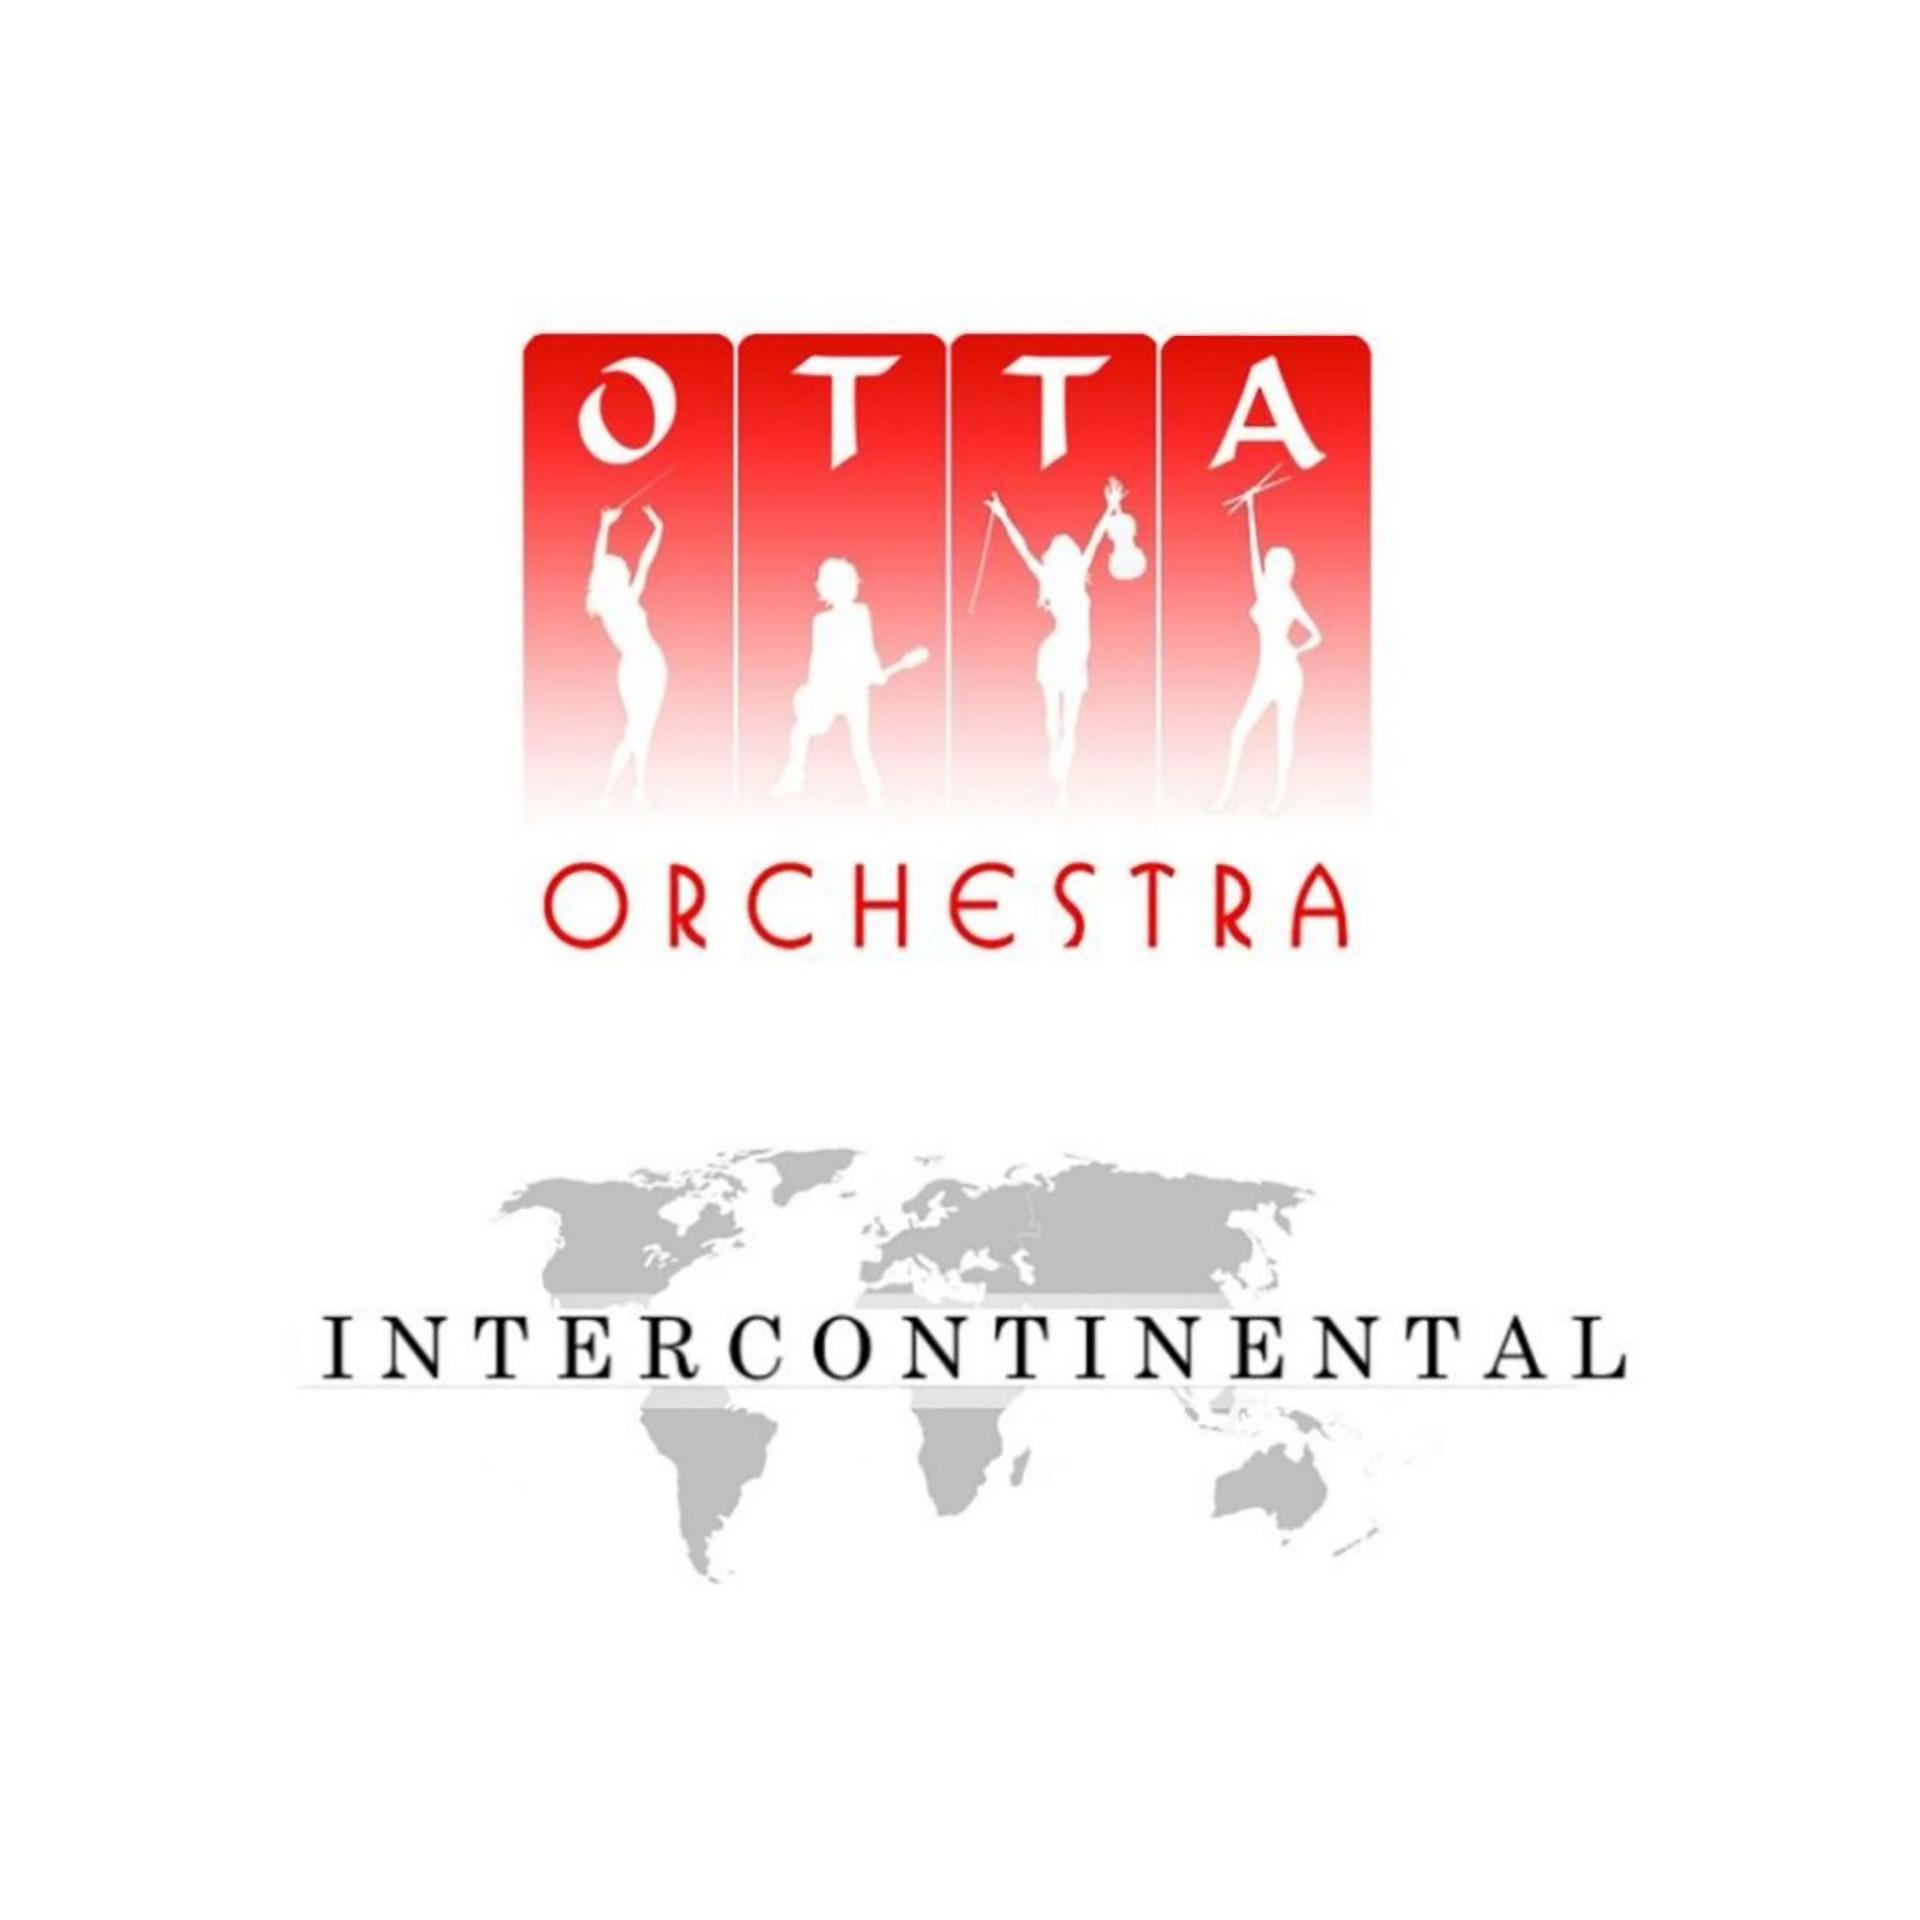 Otta orchestra лучшее. Группа Otta Orchestra. Otta-Orchestra Royal Safari обложка. Отта оркестр Роял сафари. Otta-Orchestra - INTERCONTINENTAL (2010).